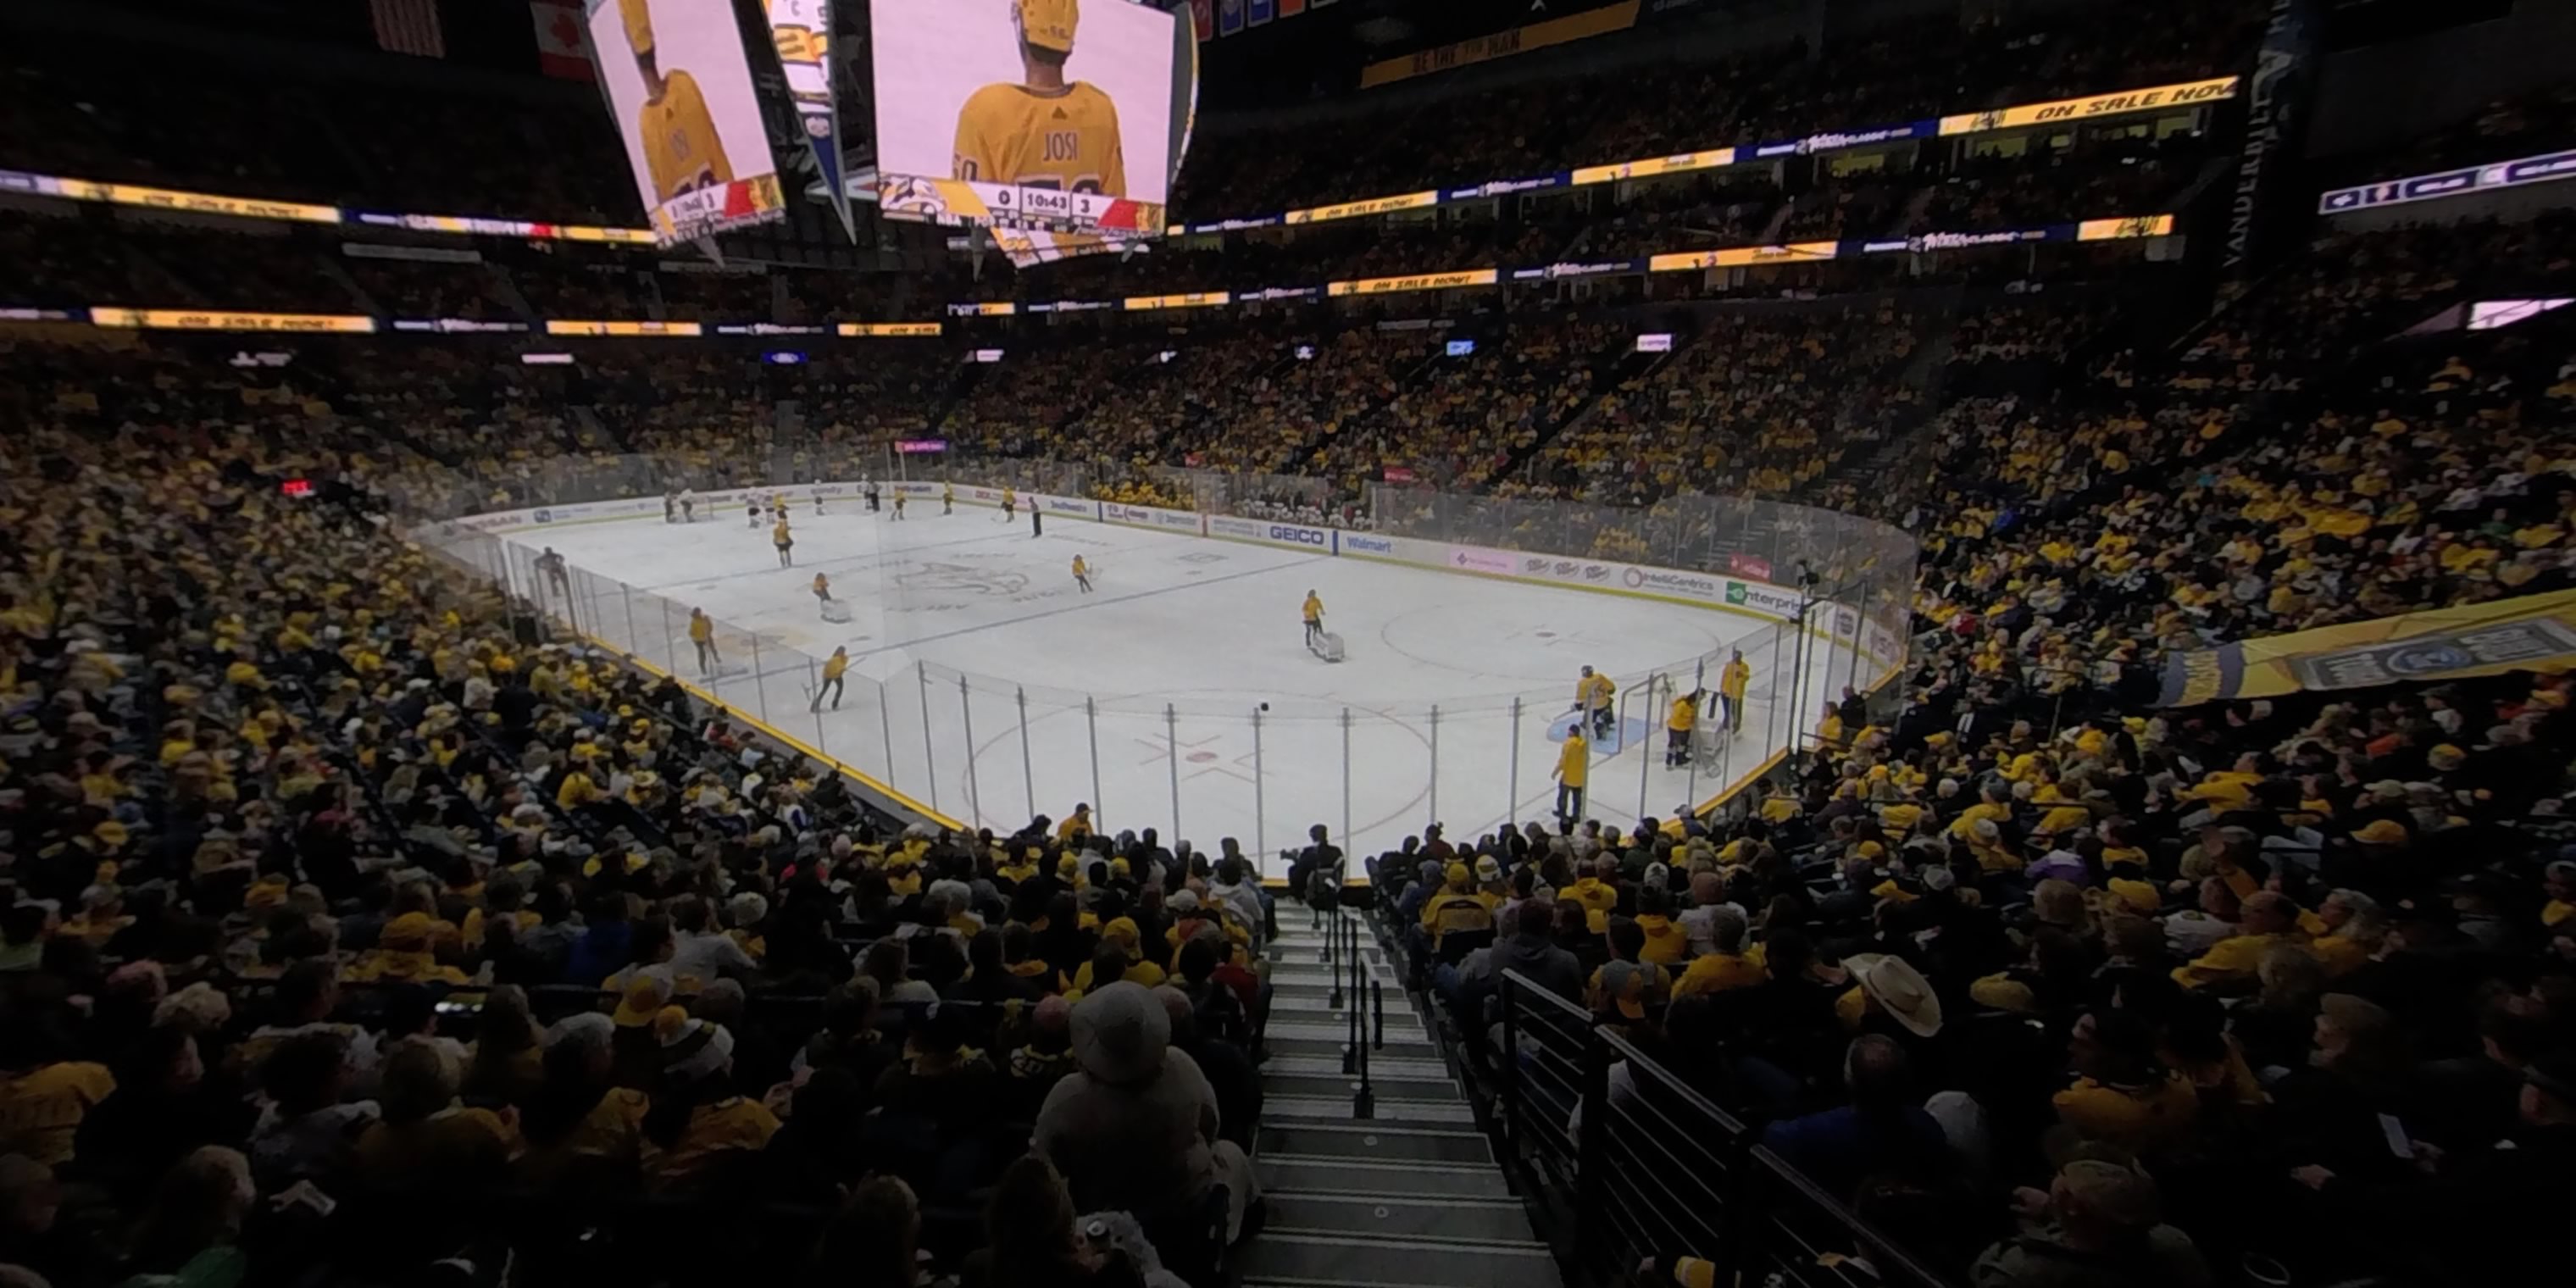 section 108 panoramic seat view  for hockey - bridgestone arena